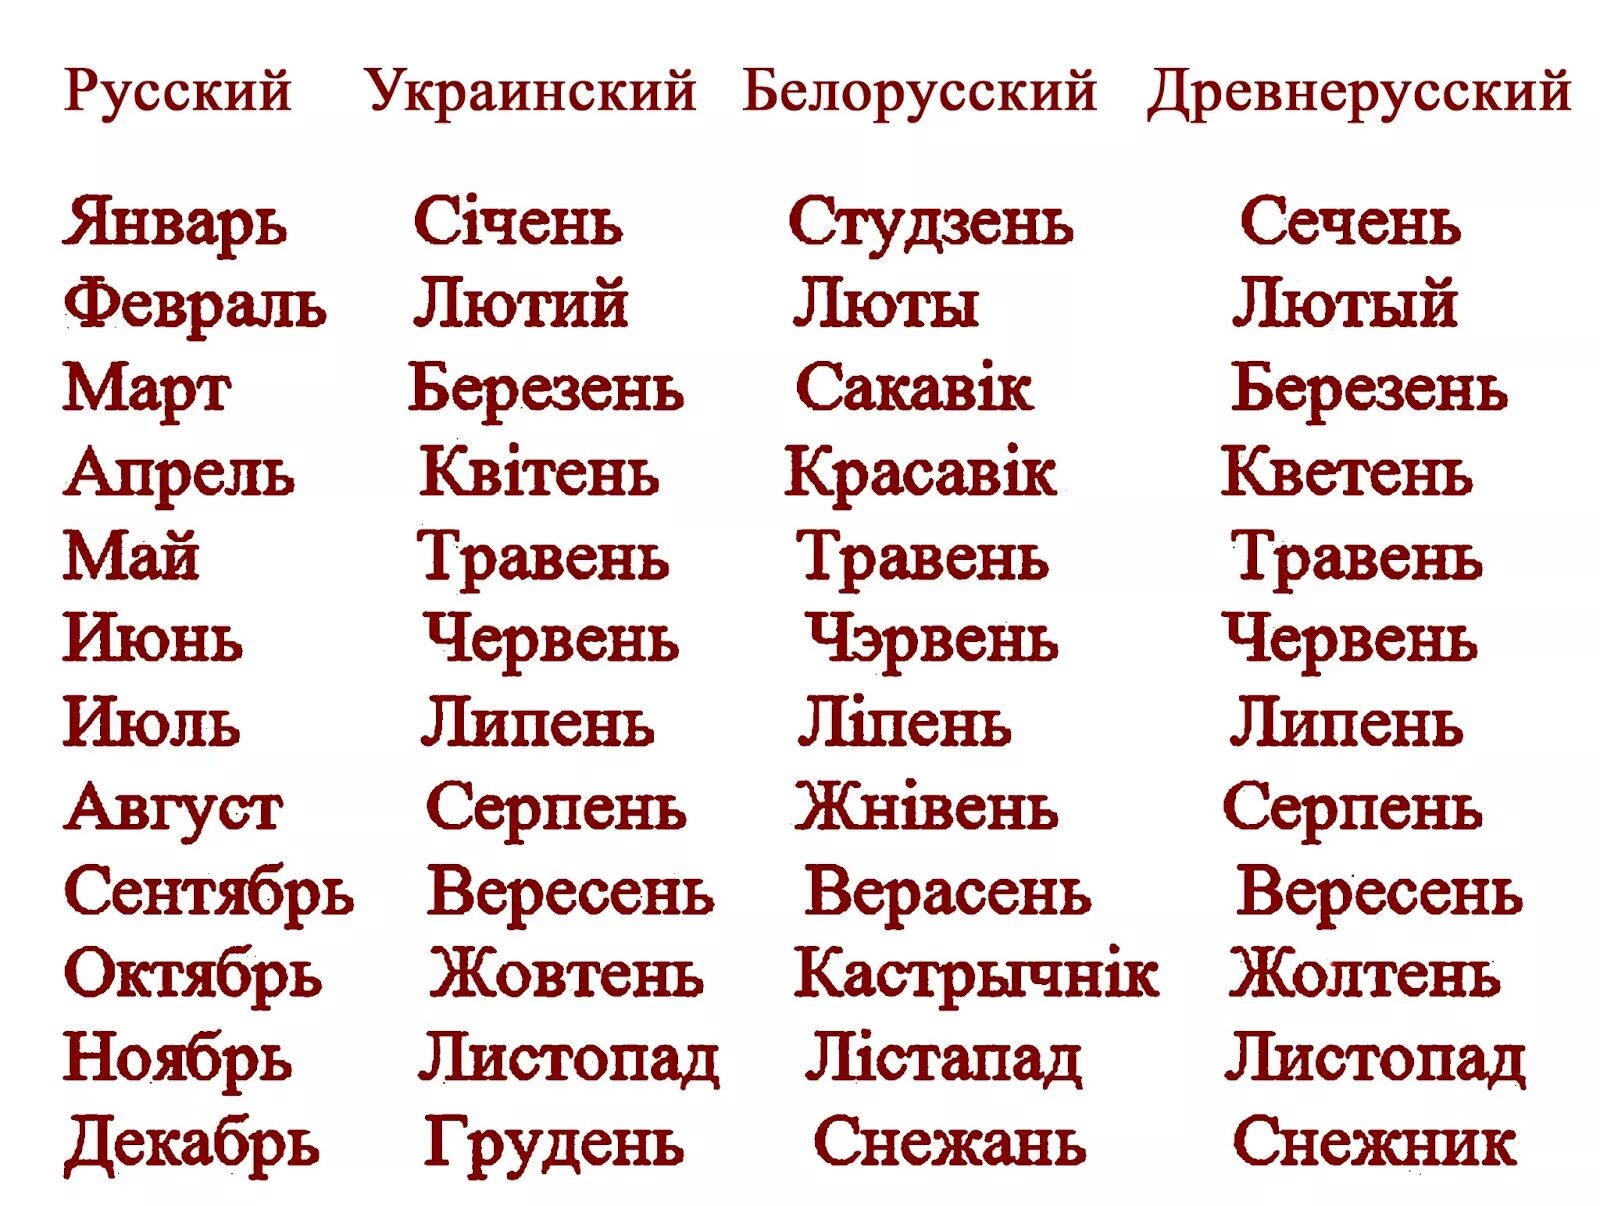 Месяца на украинском. Названия месяцев на украинском. Месяца года на украинском языке. Месяца с украинского на русский.